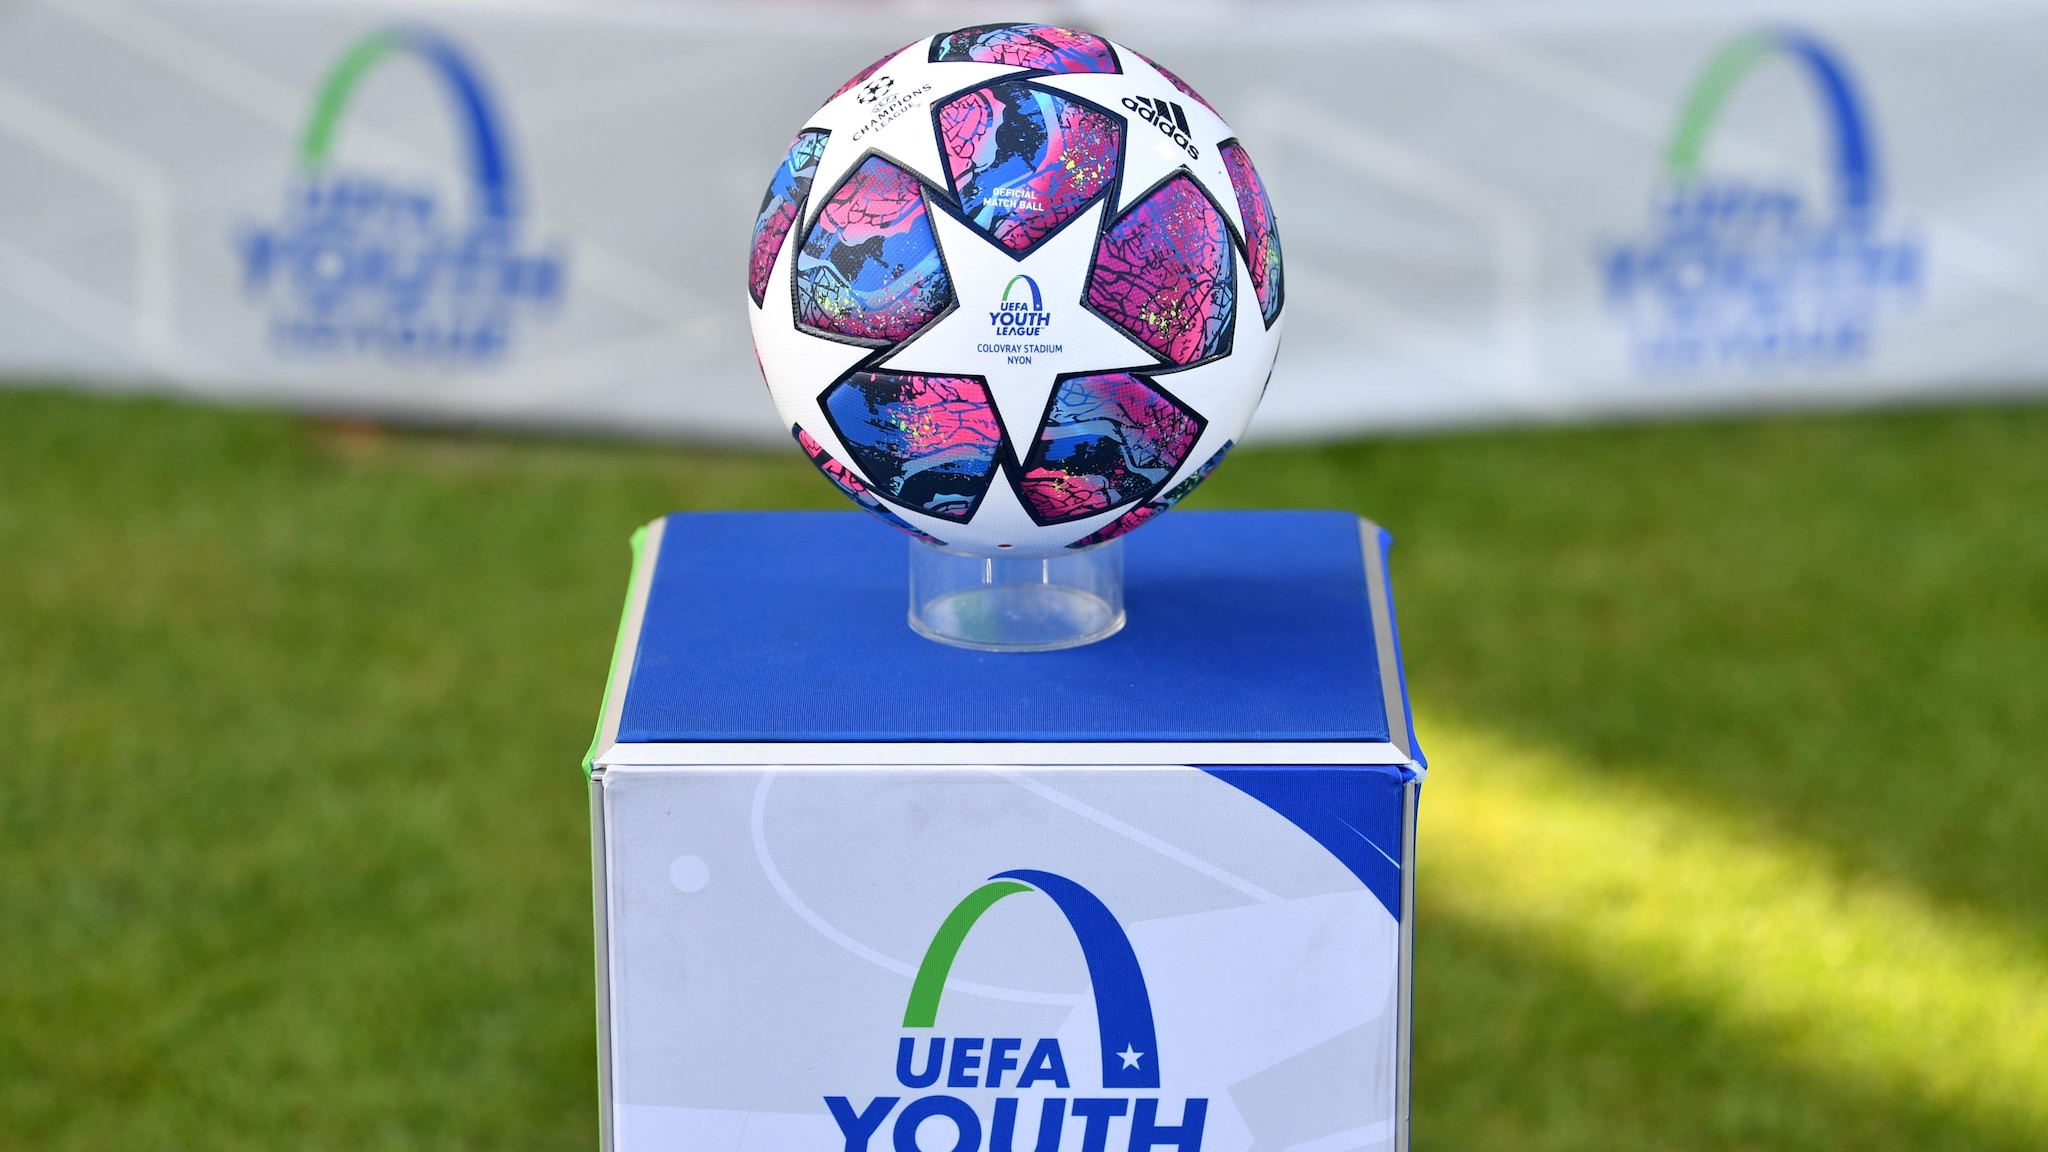 Юношеская уефа. UEFA Youth League. Юношеская лига УЕФА трофей. Трофей юниорская лига УЕФА. UEFA Youth League logo.